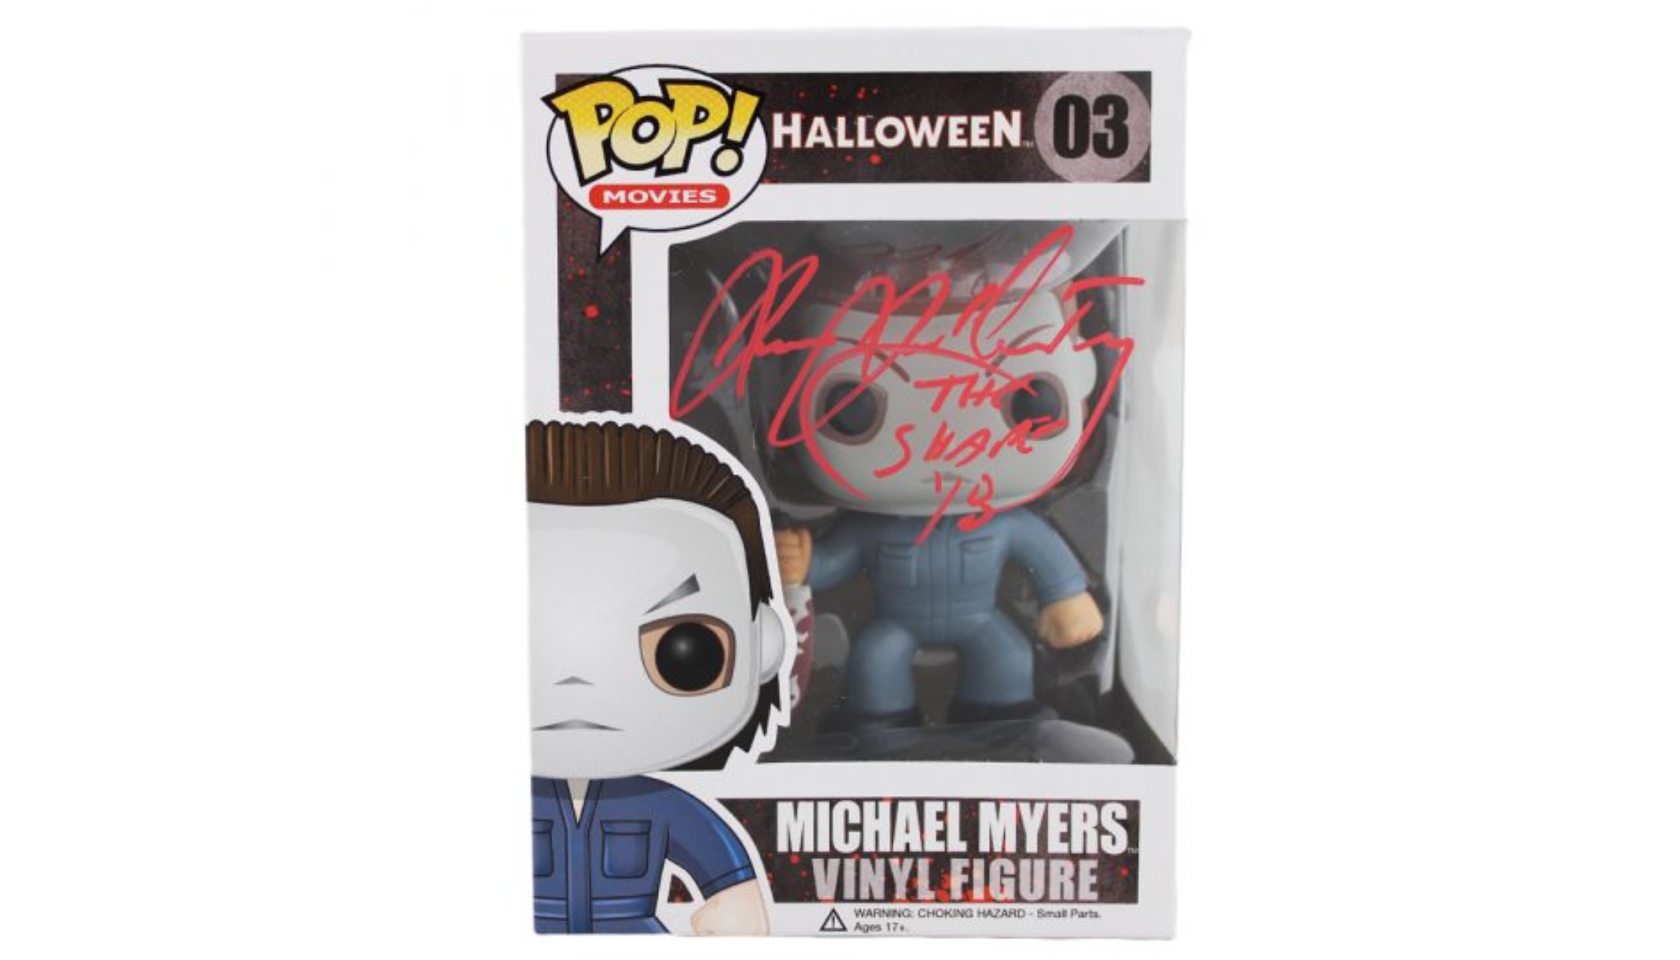 James Jude Courtney “Michael Myers” Signed “Halloween” Model #03